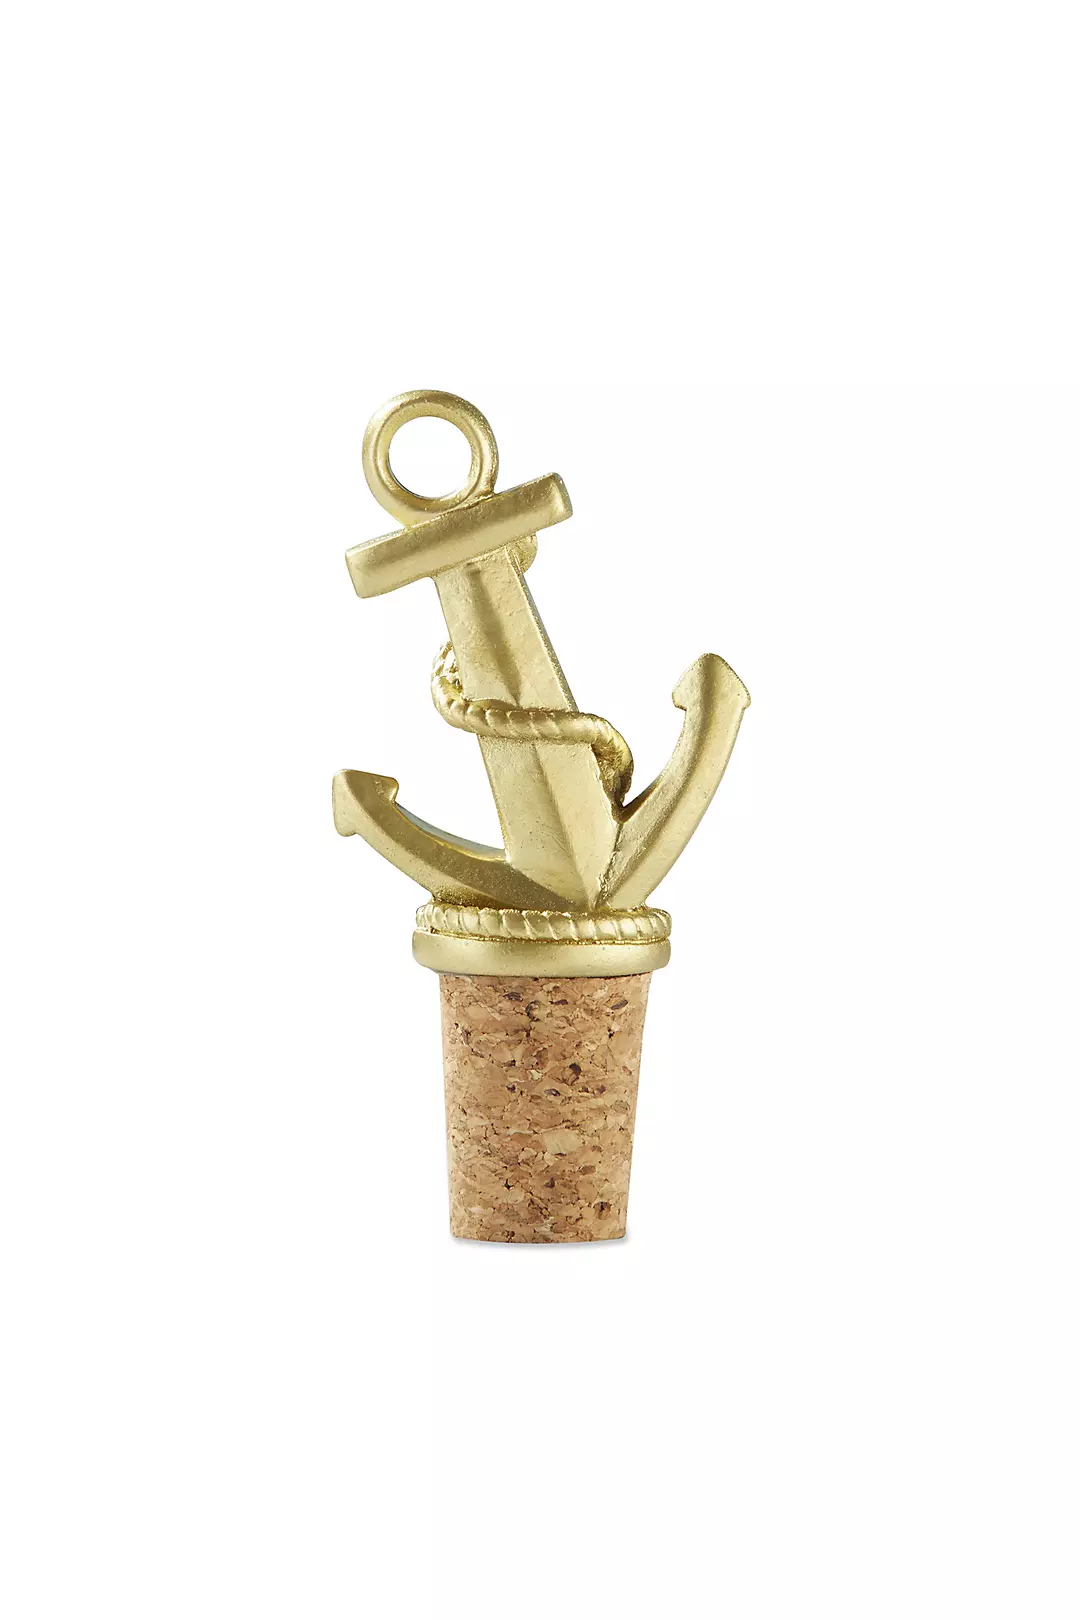 Gold Nautical Anchor Bottle Stopper Set of 6 Image